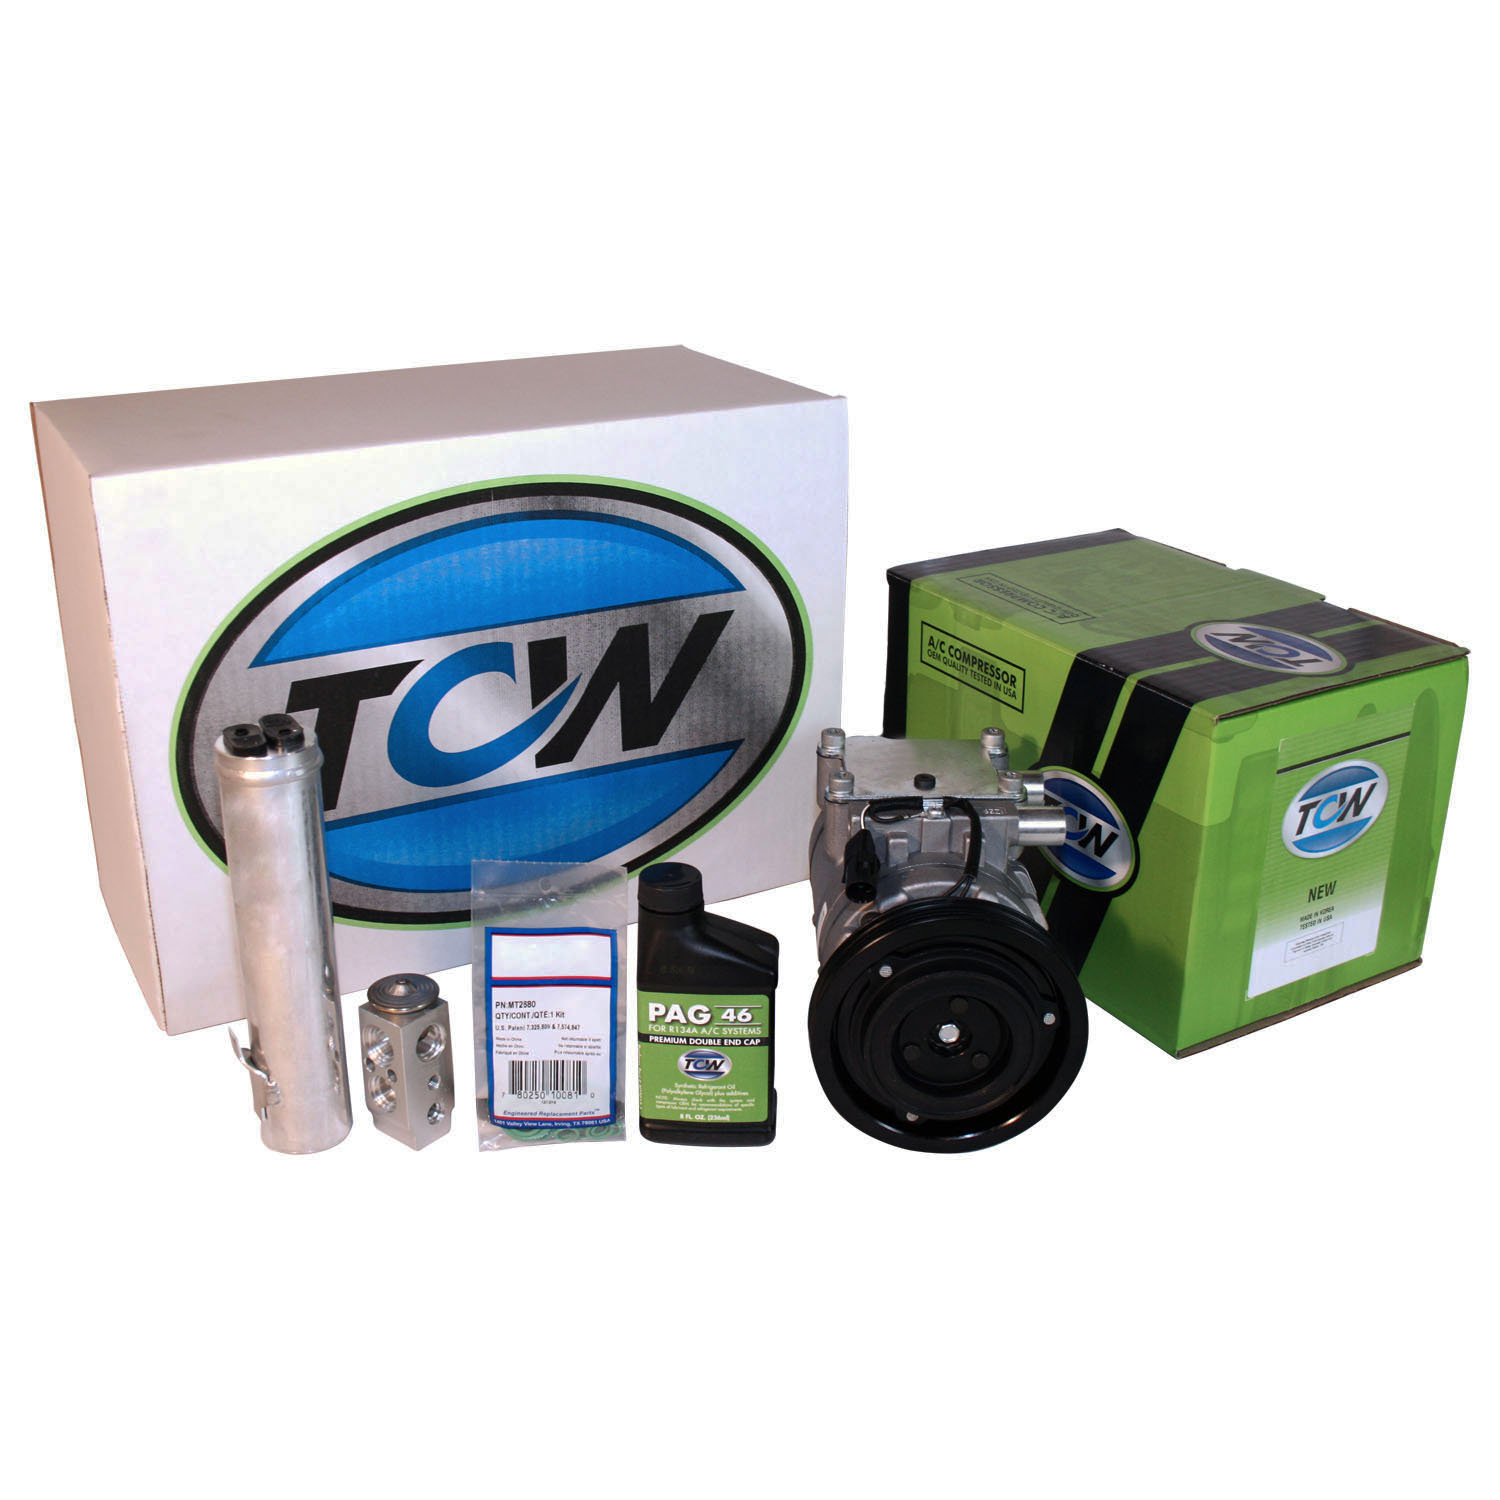 TCW Vehicle A/C Kit K1000458N New Product Image field_60b6a13a6e67c